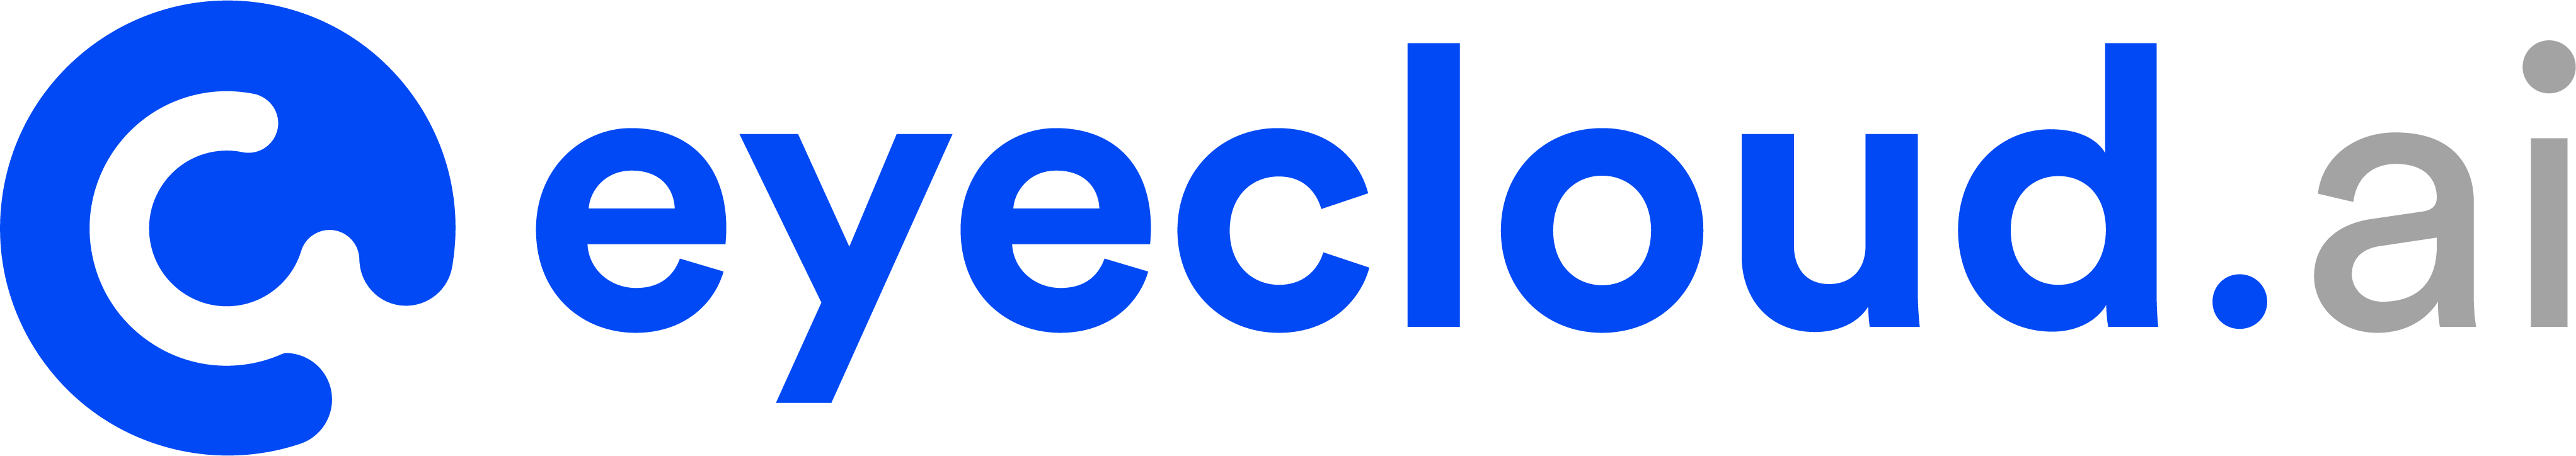 Eyecloud, Inc. Logo